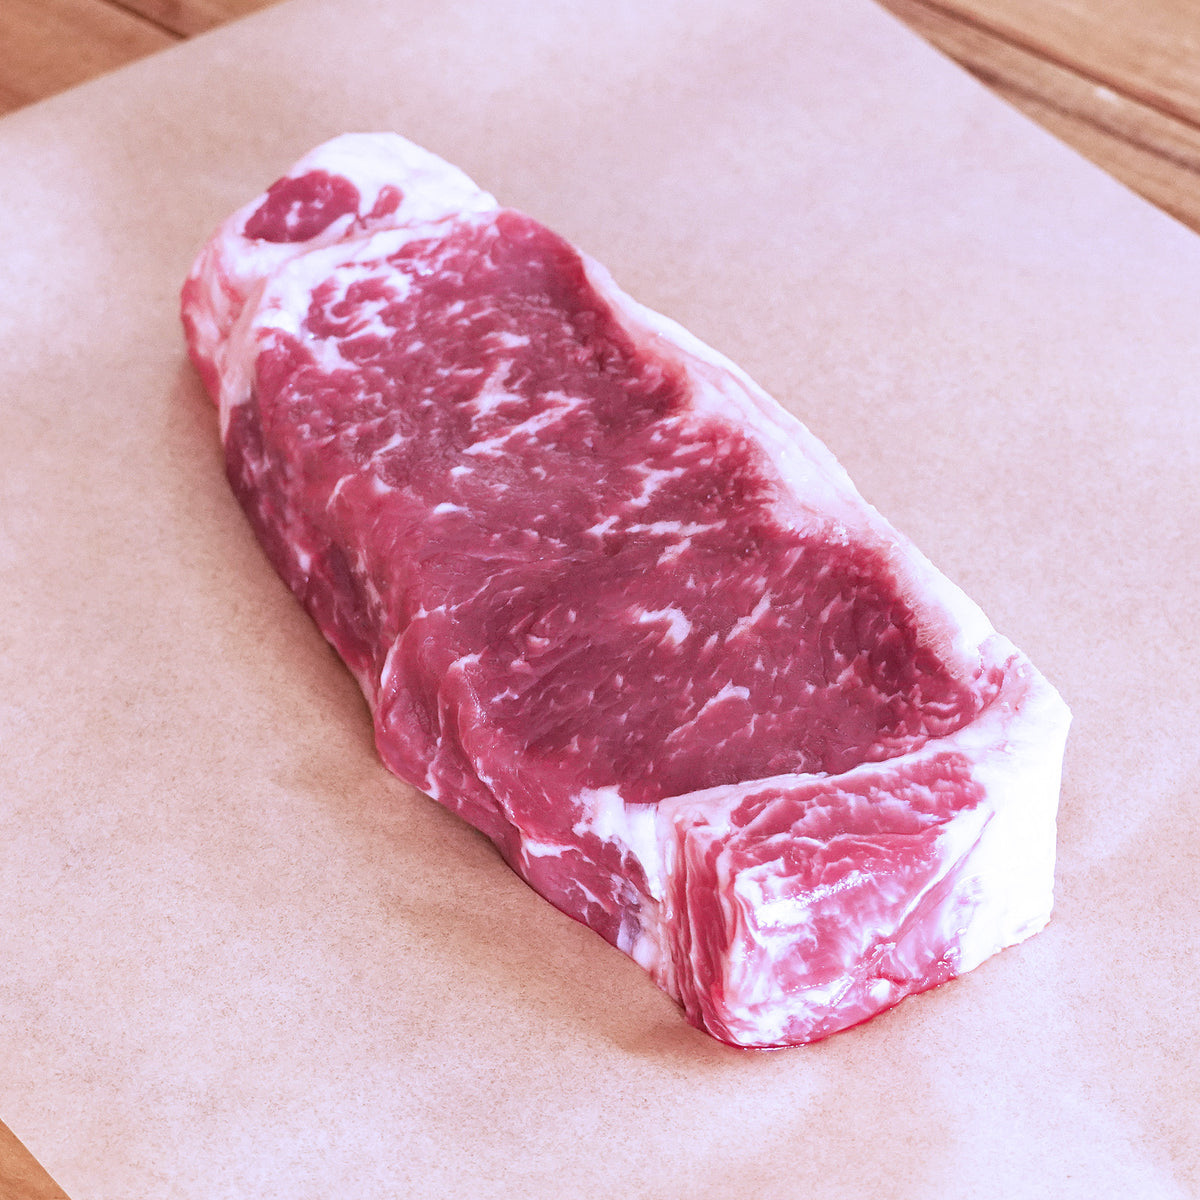 Grass-Fed Premium Beef Striploin Steak Australia (300g) - Horizon Farms